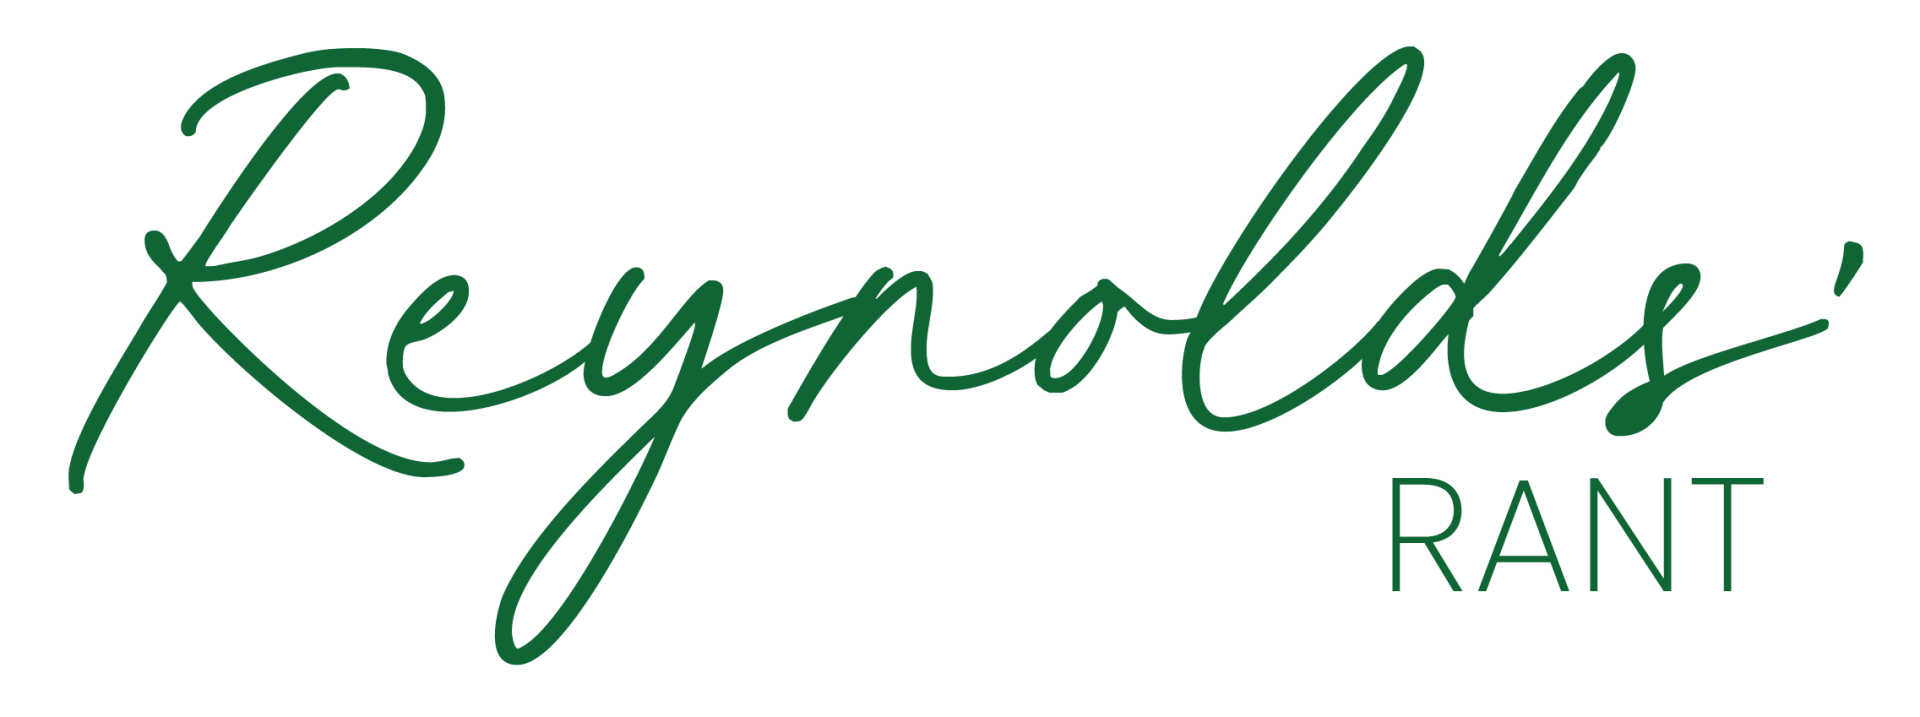 Reynolds Rant Logo